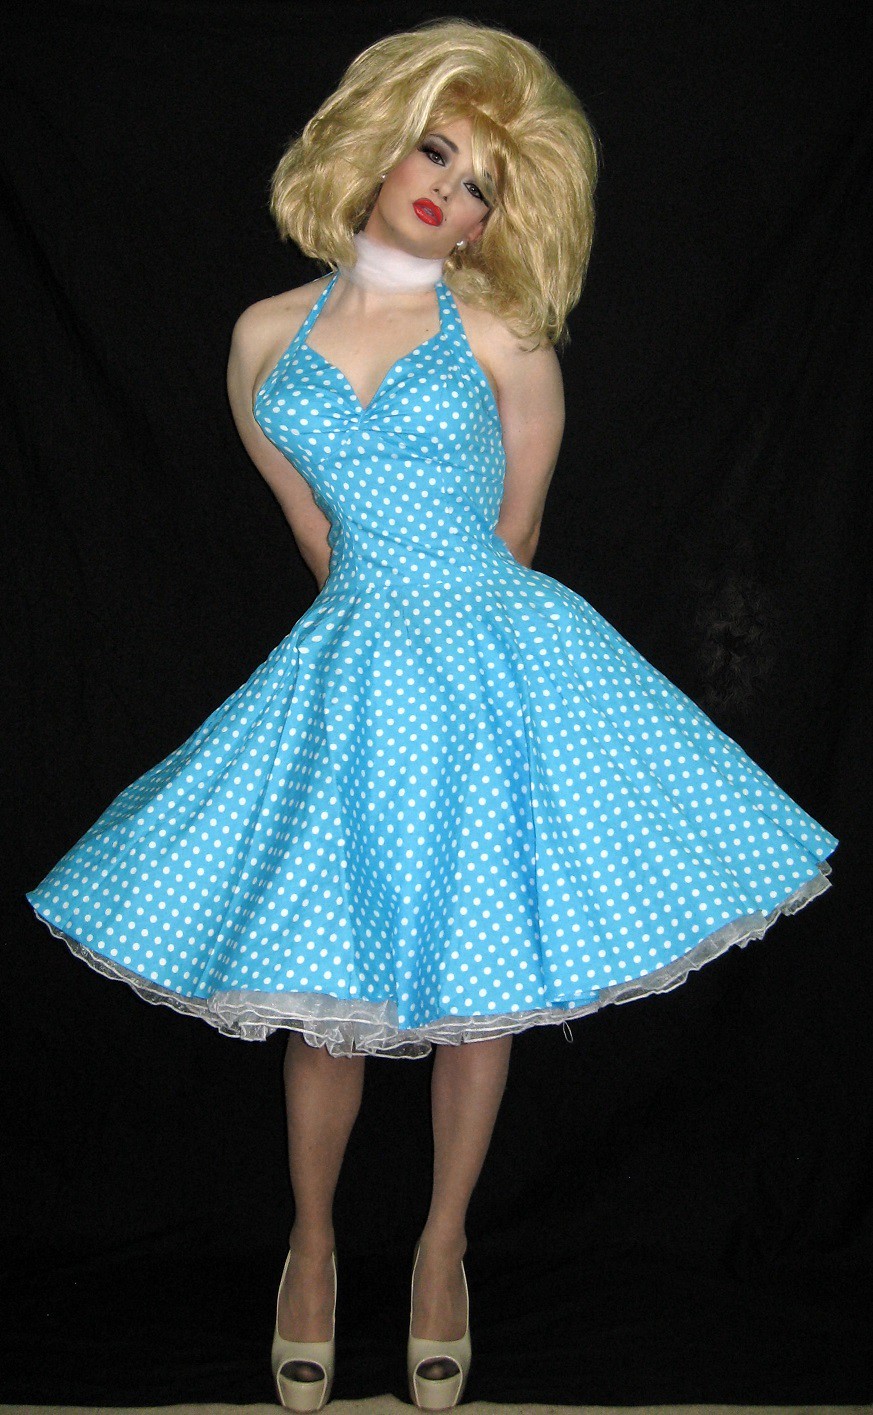 Crinoline Petticoats The Ultimate In Femininity Flickr